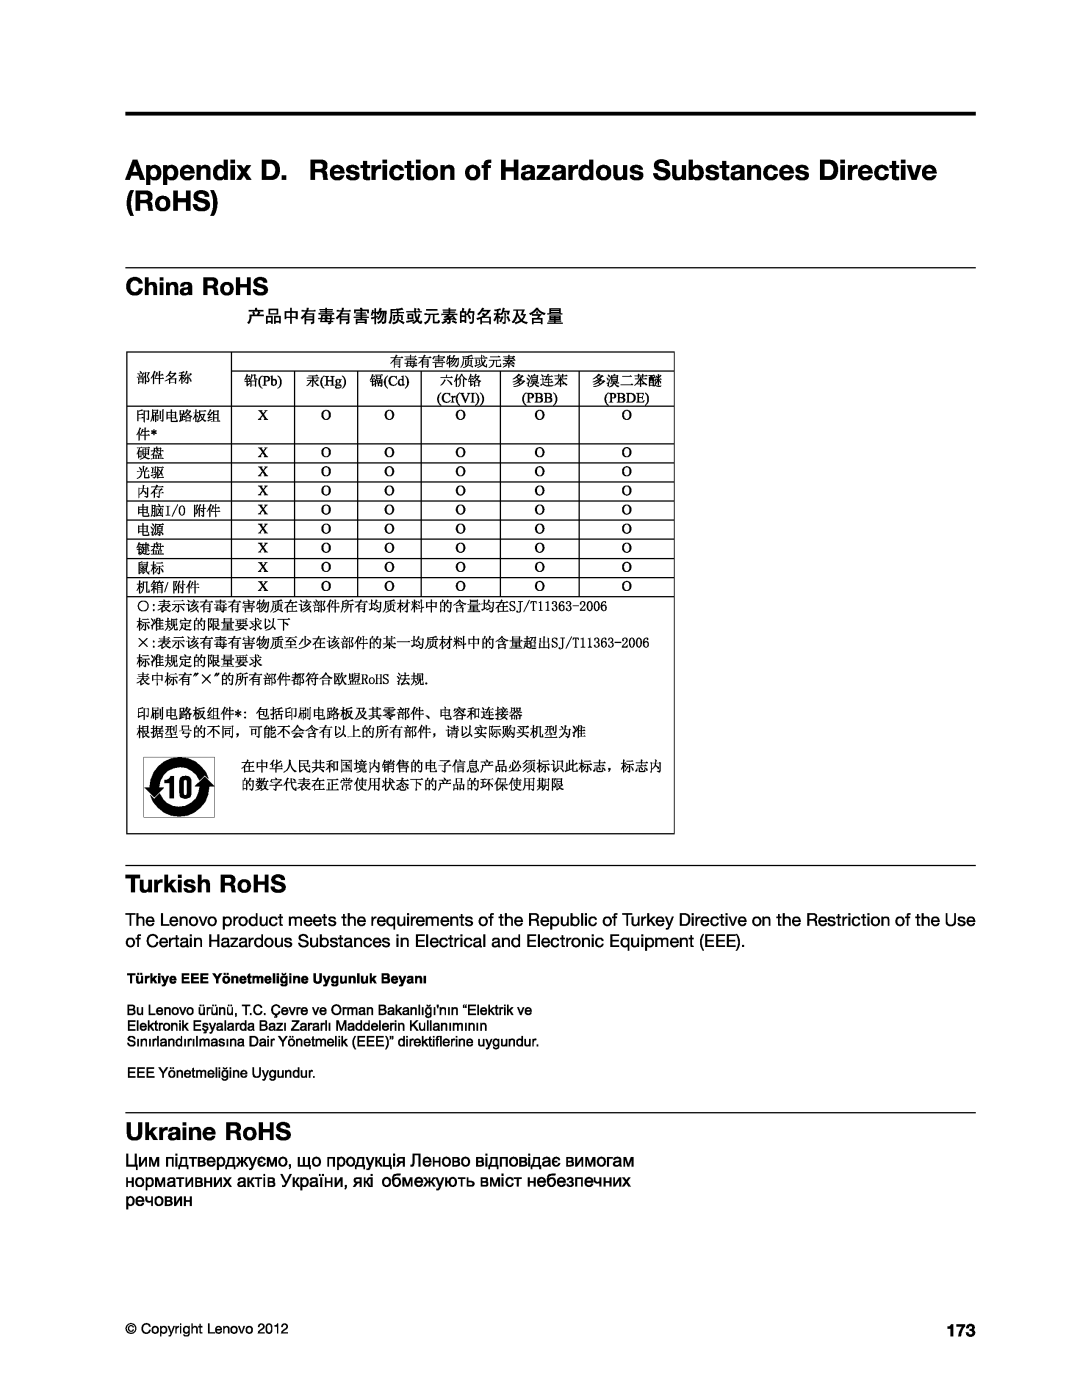 Lenovo 243858U, W530 Appendix D. Restriction of Hazardous Substances Directive RoHS, China RoHS Turkish RoHS, Ukraine RoHS 